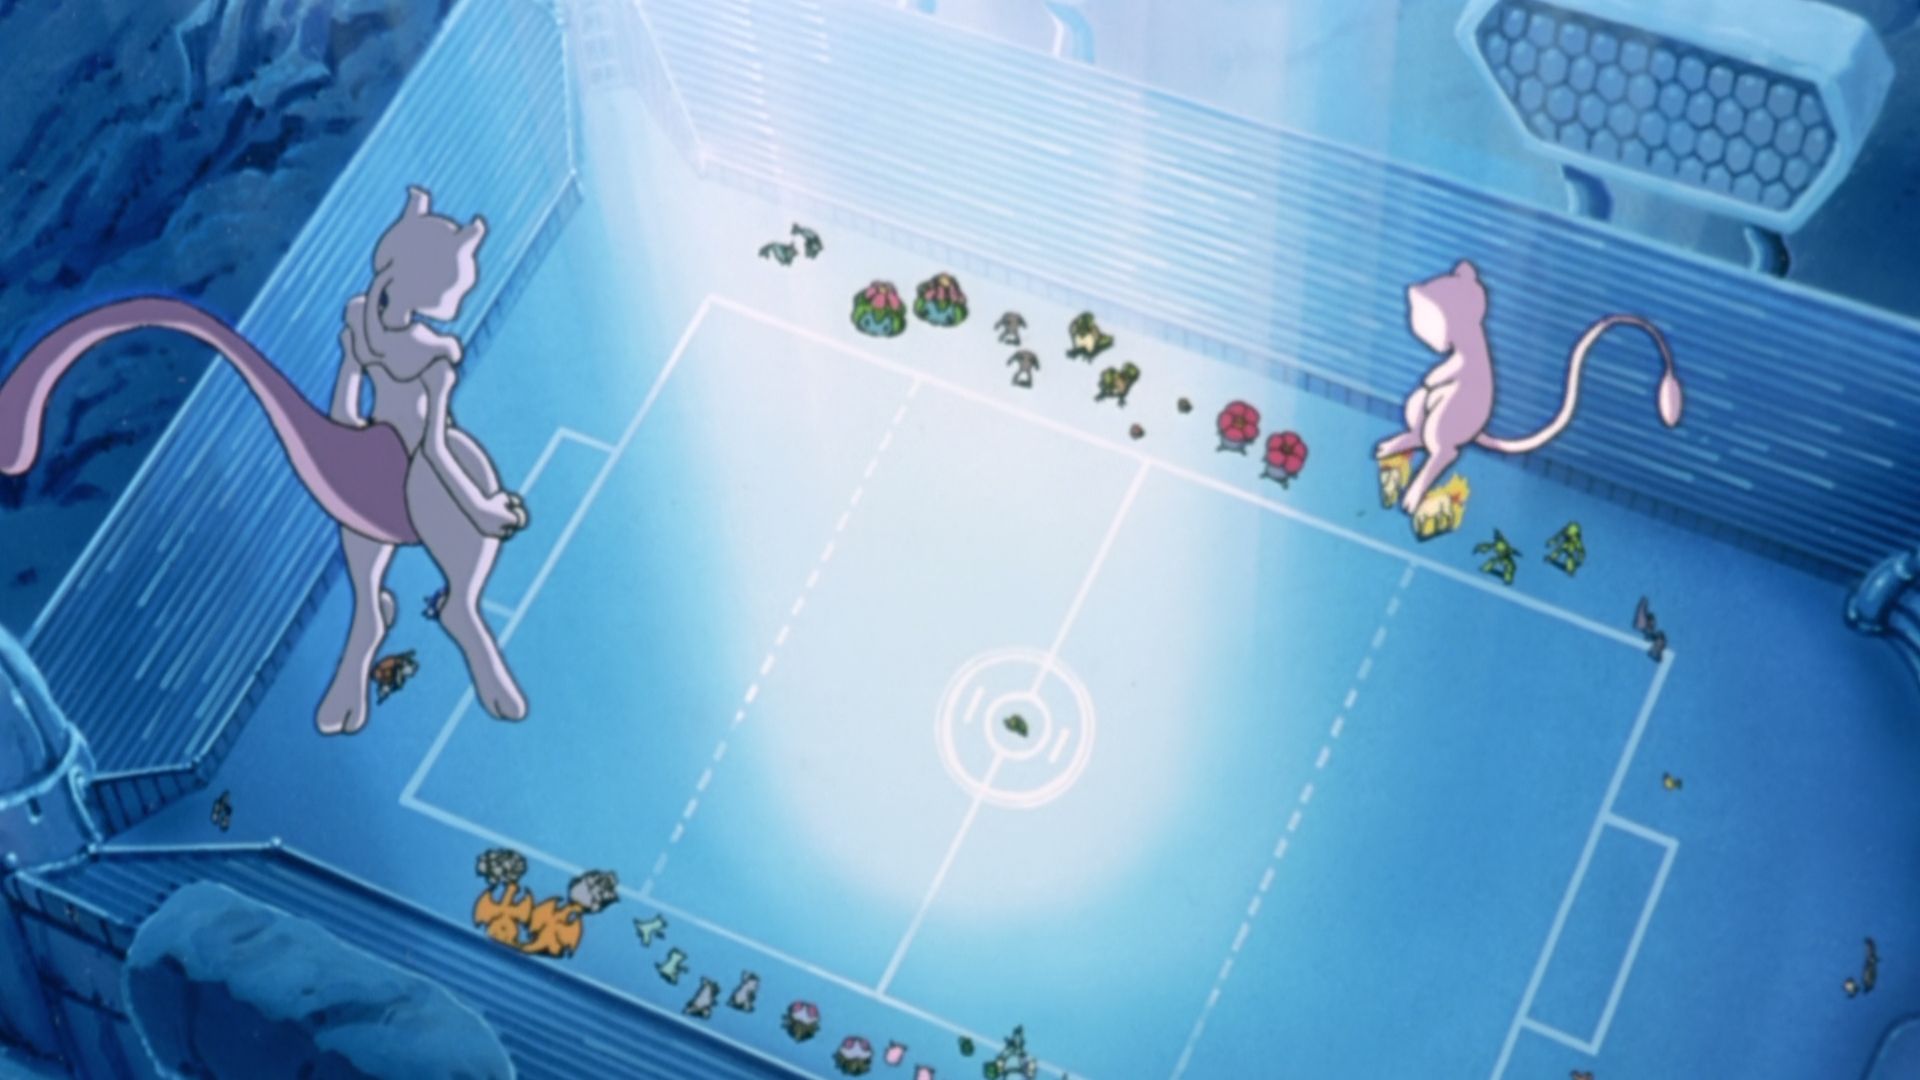 Descarga gratis la imagen Pokémon, Animado, Mewtwo (Pokémon), Mew (Pokémon), Pokémon The Movie: Mewtwo Strikes Back en el escritorio de tu PC